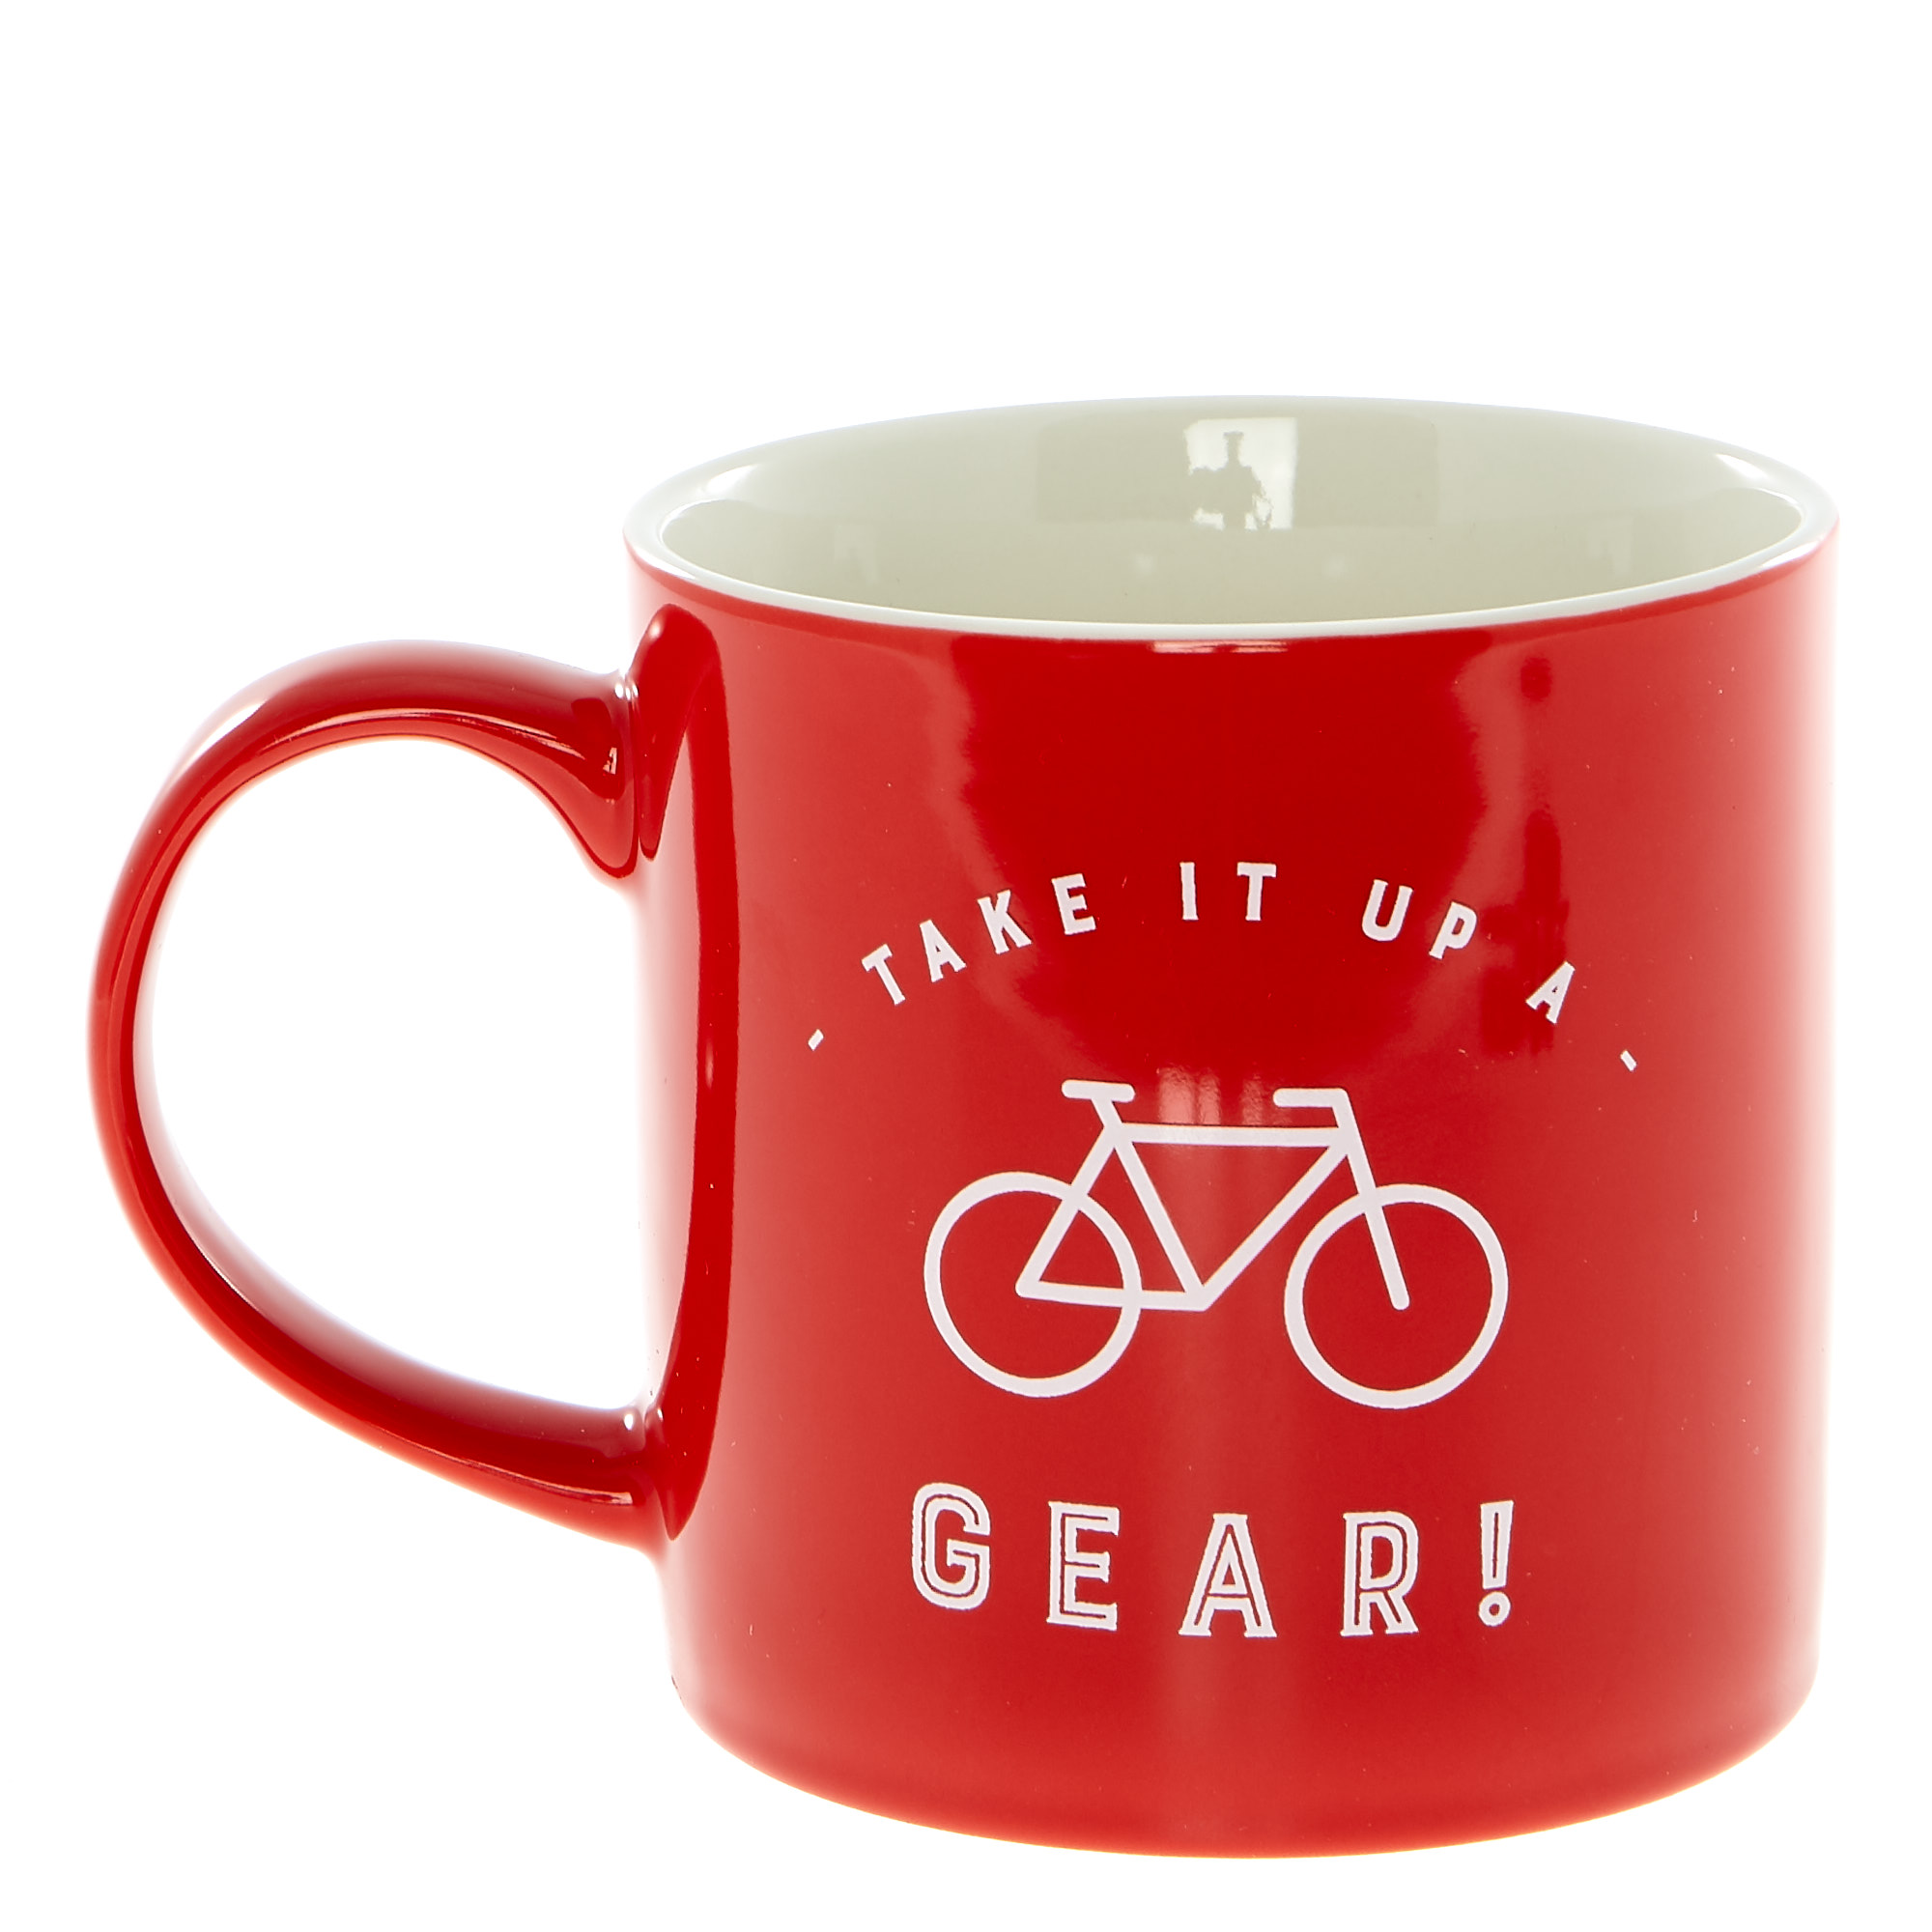 Take It Up A Gear Mug & Bike Tool Set